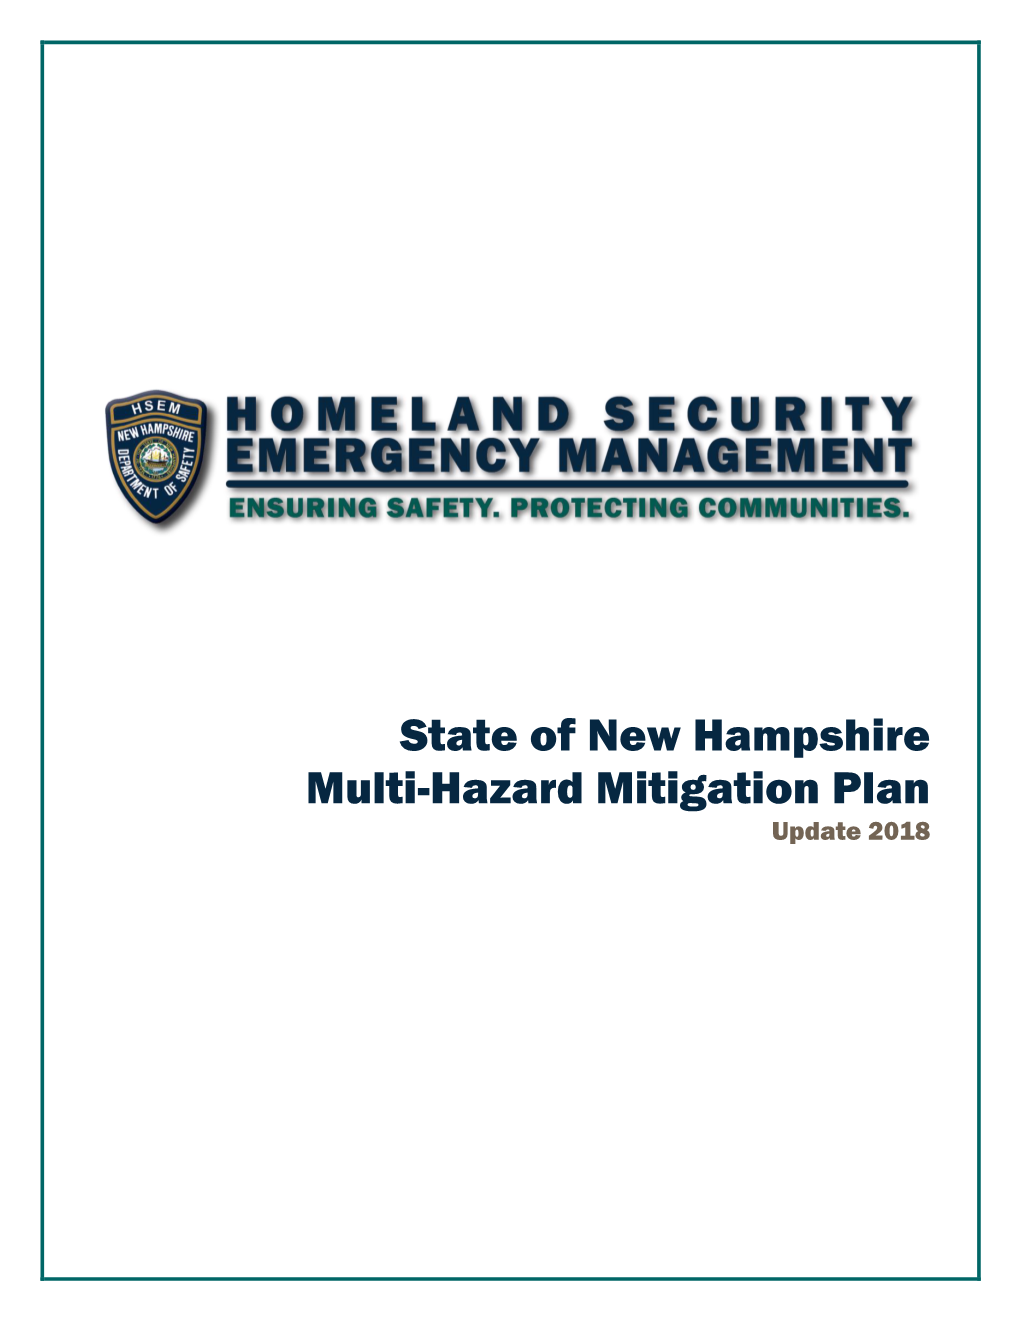 State of New Hampshire Multi Hazard Mitigation Plan Update 2018